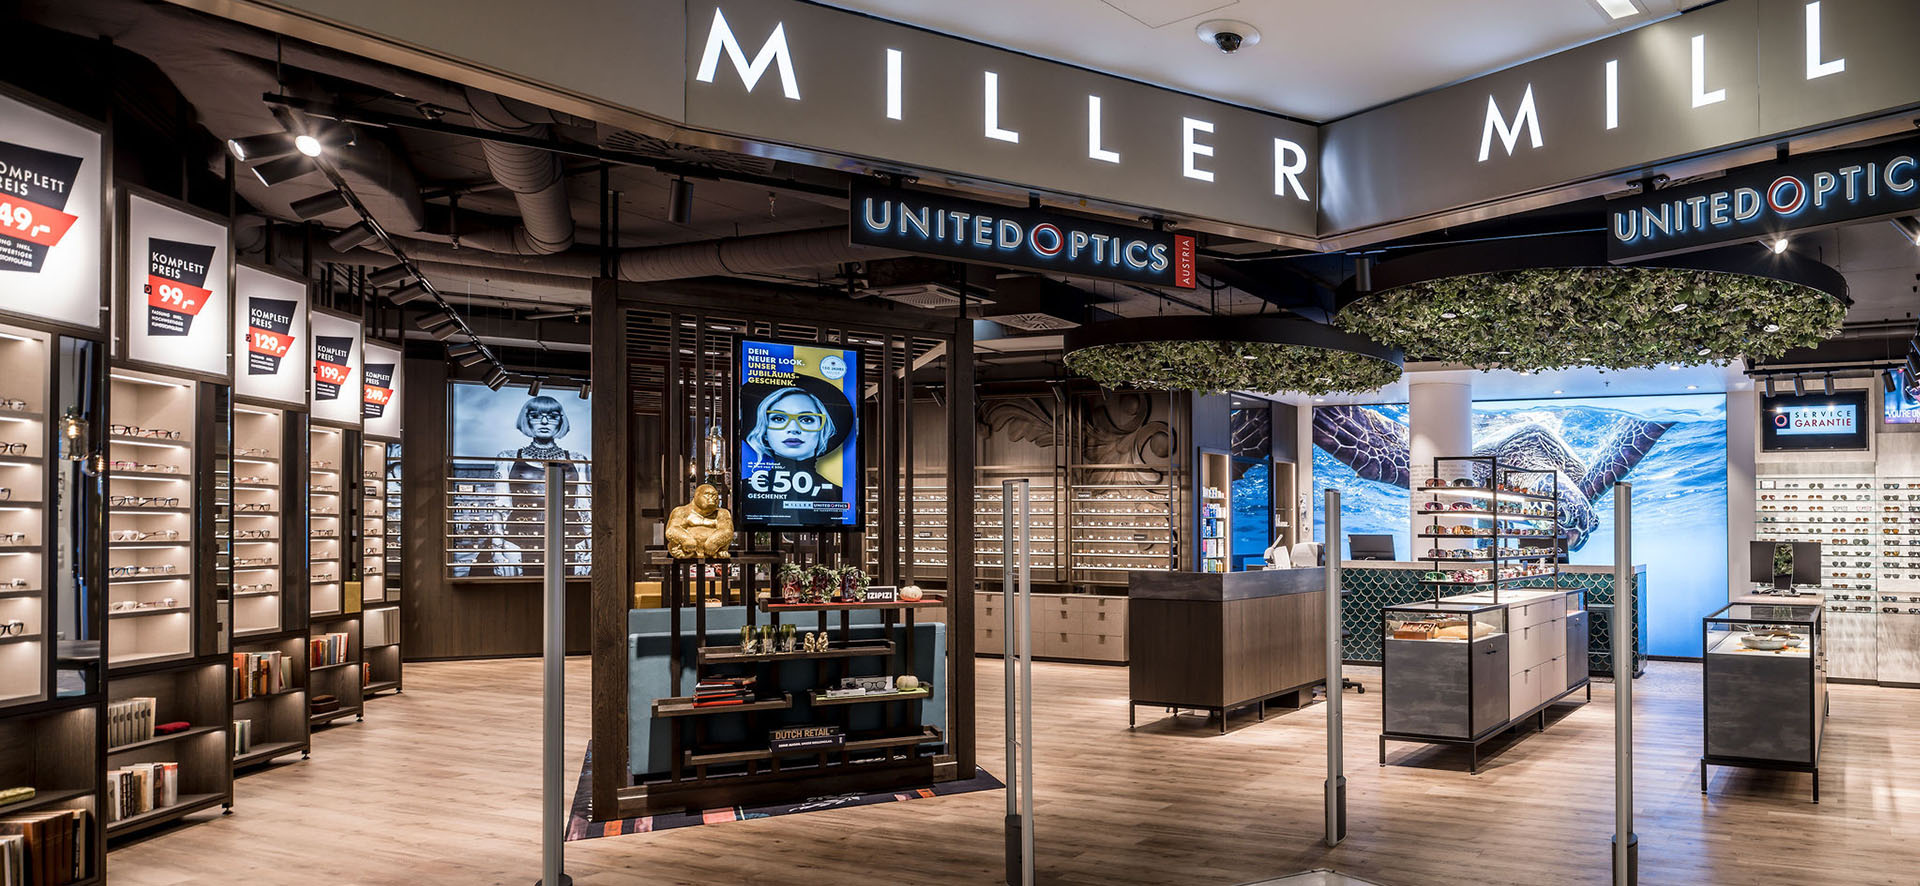 Miller United Optics | Innsbruck (AT) - Optik